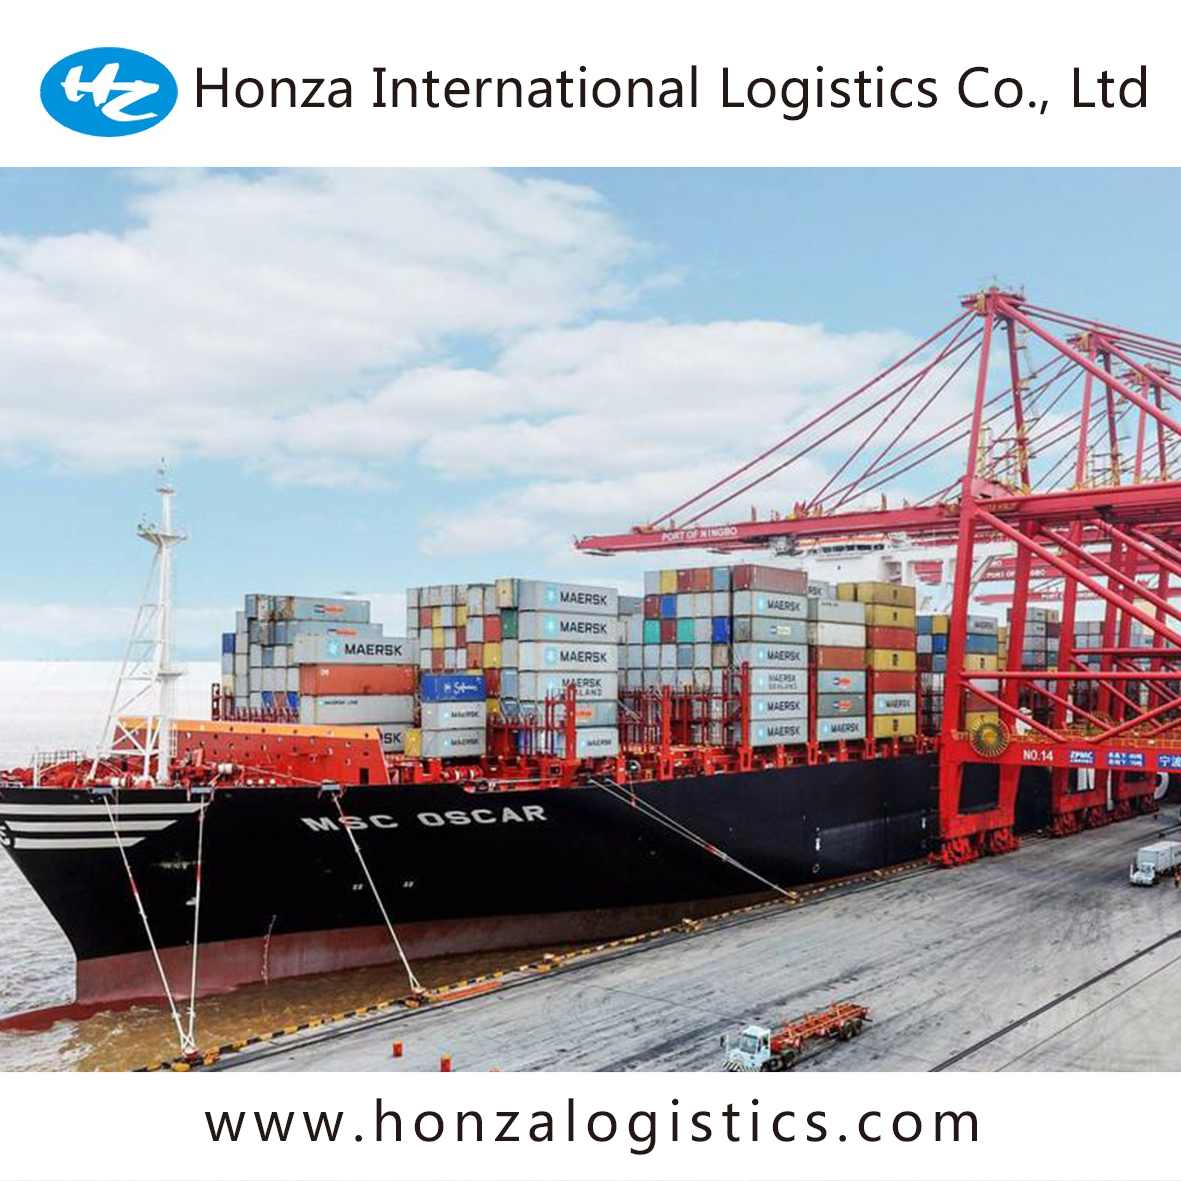 International logistics company